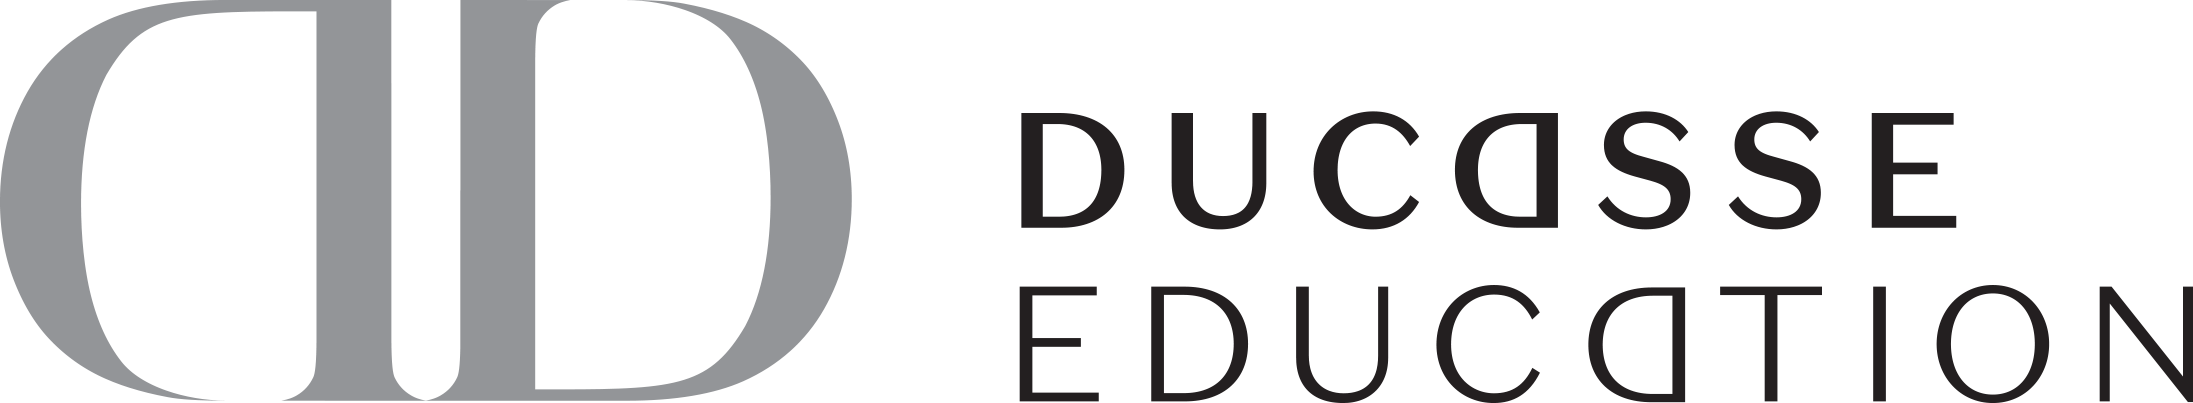 Ducasse Education